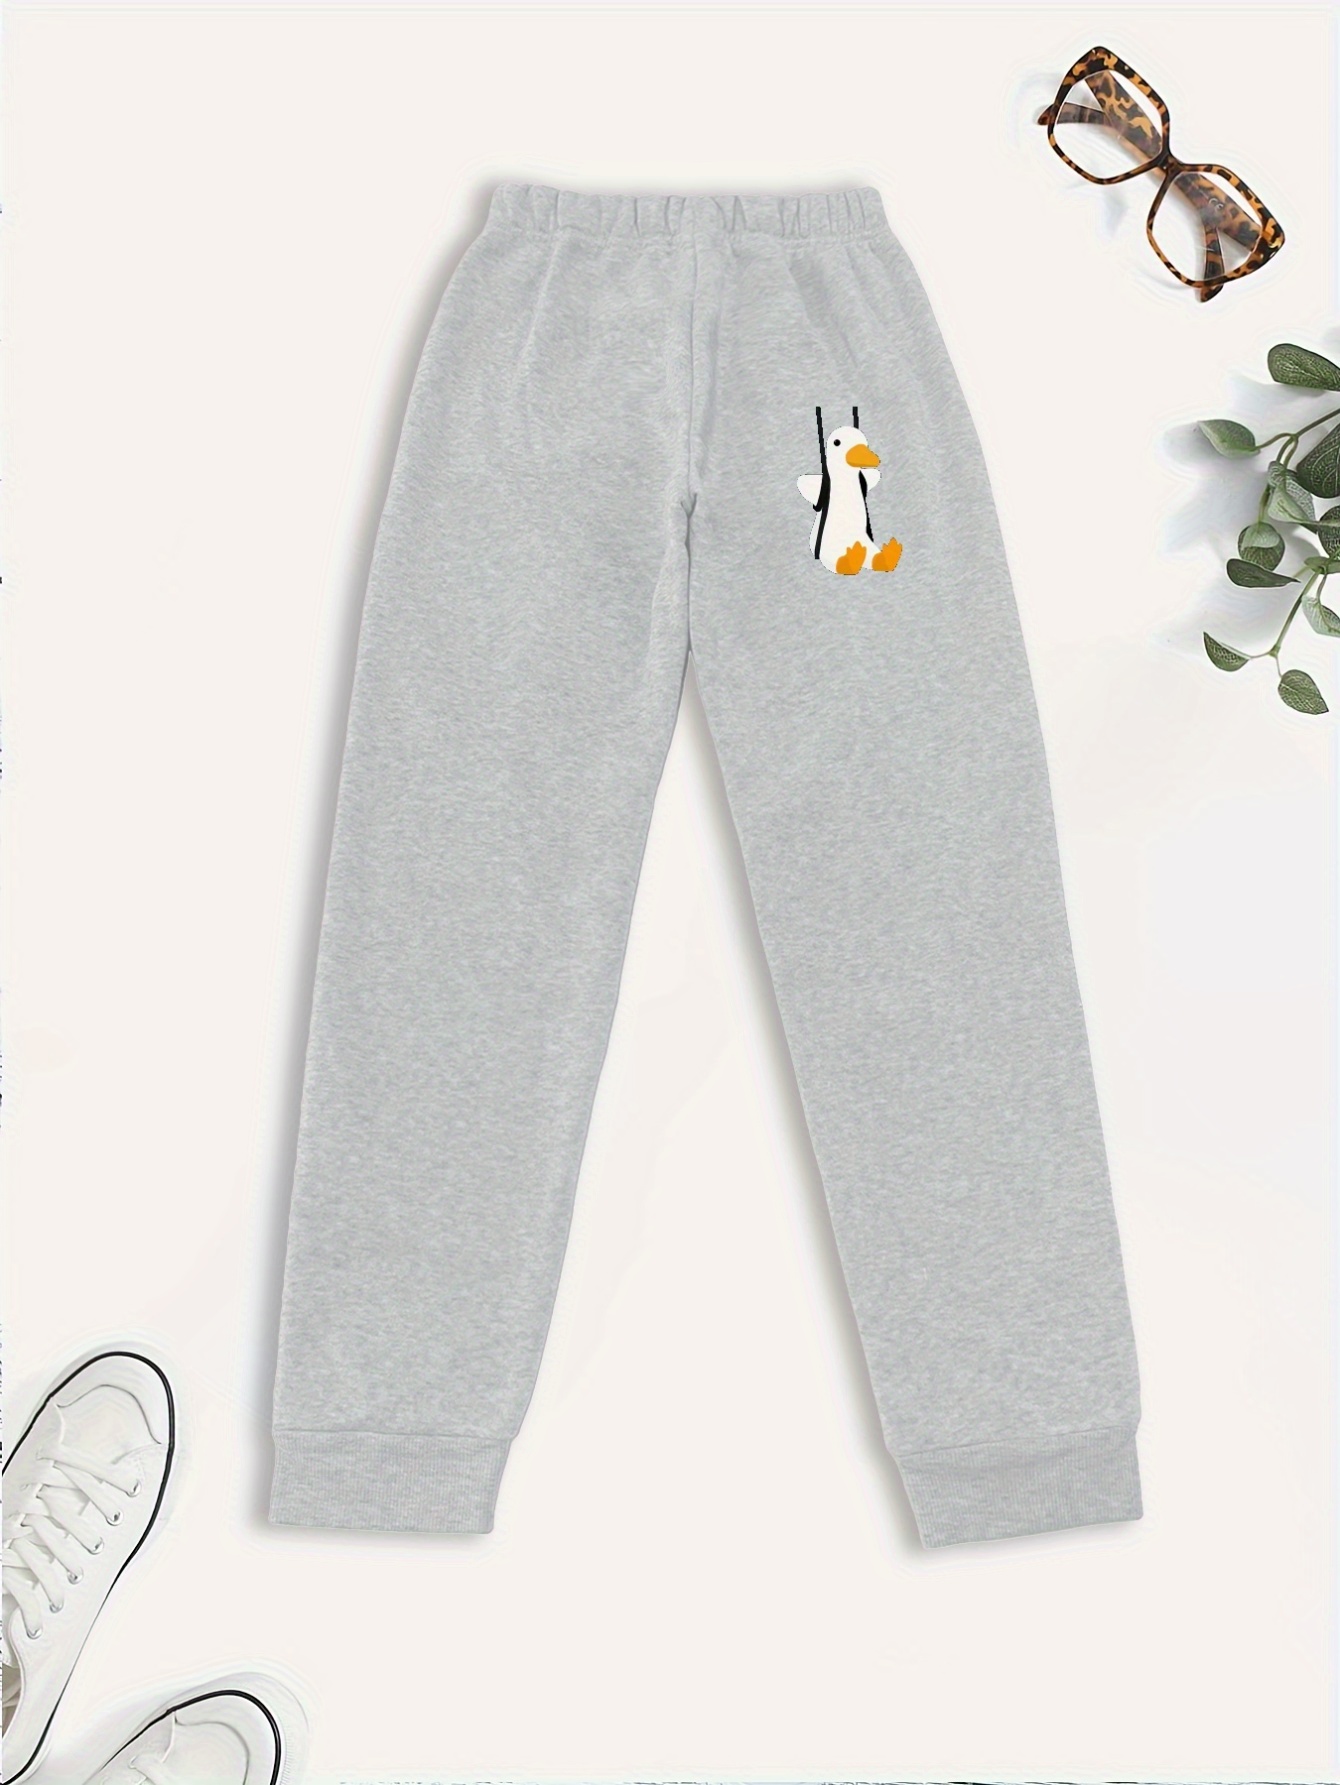 versatile grey sweatpants for kids, adorable, playful